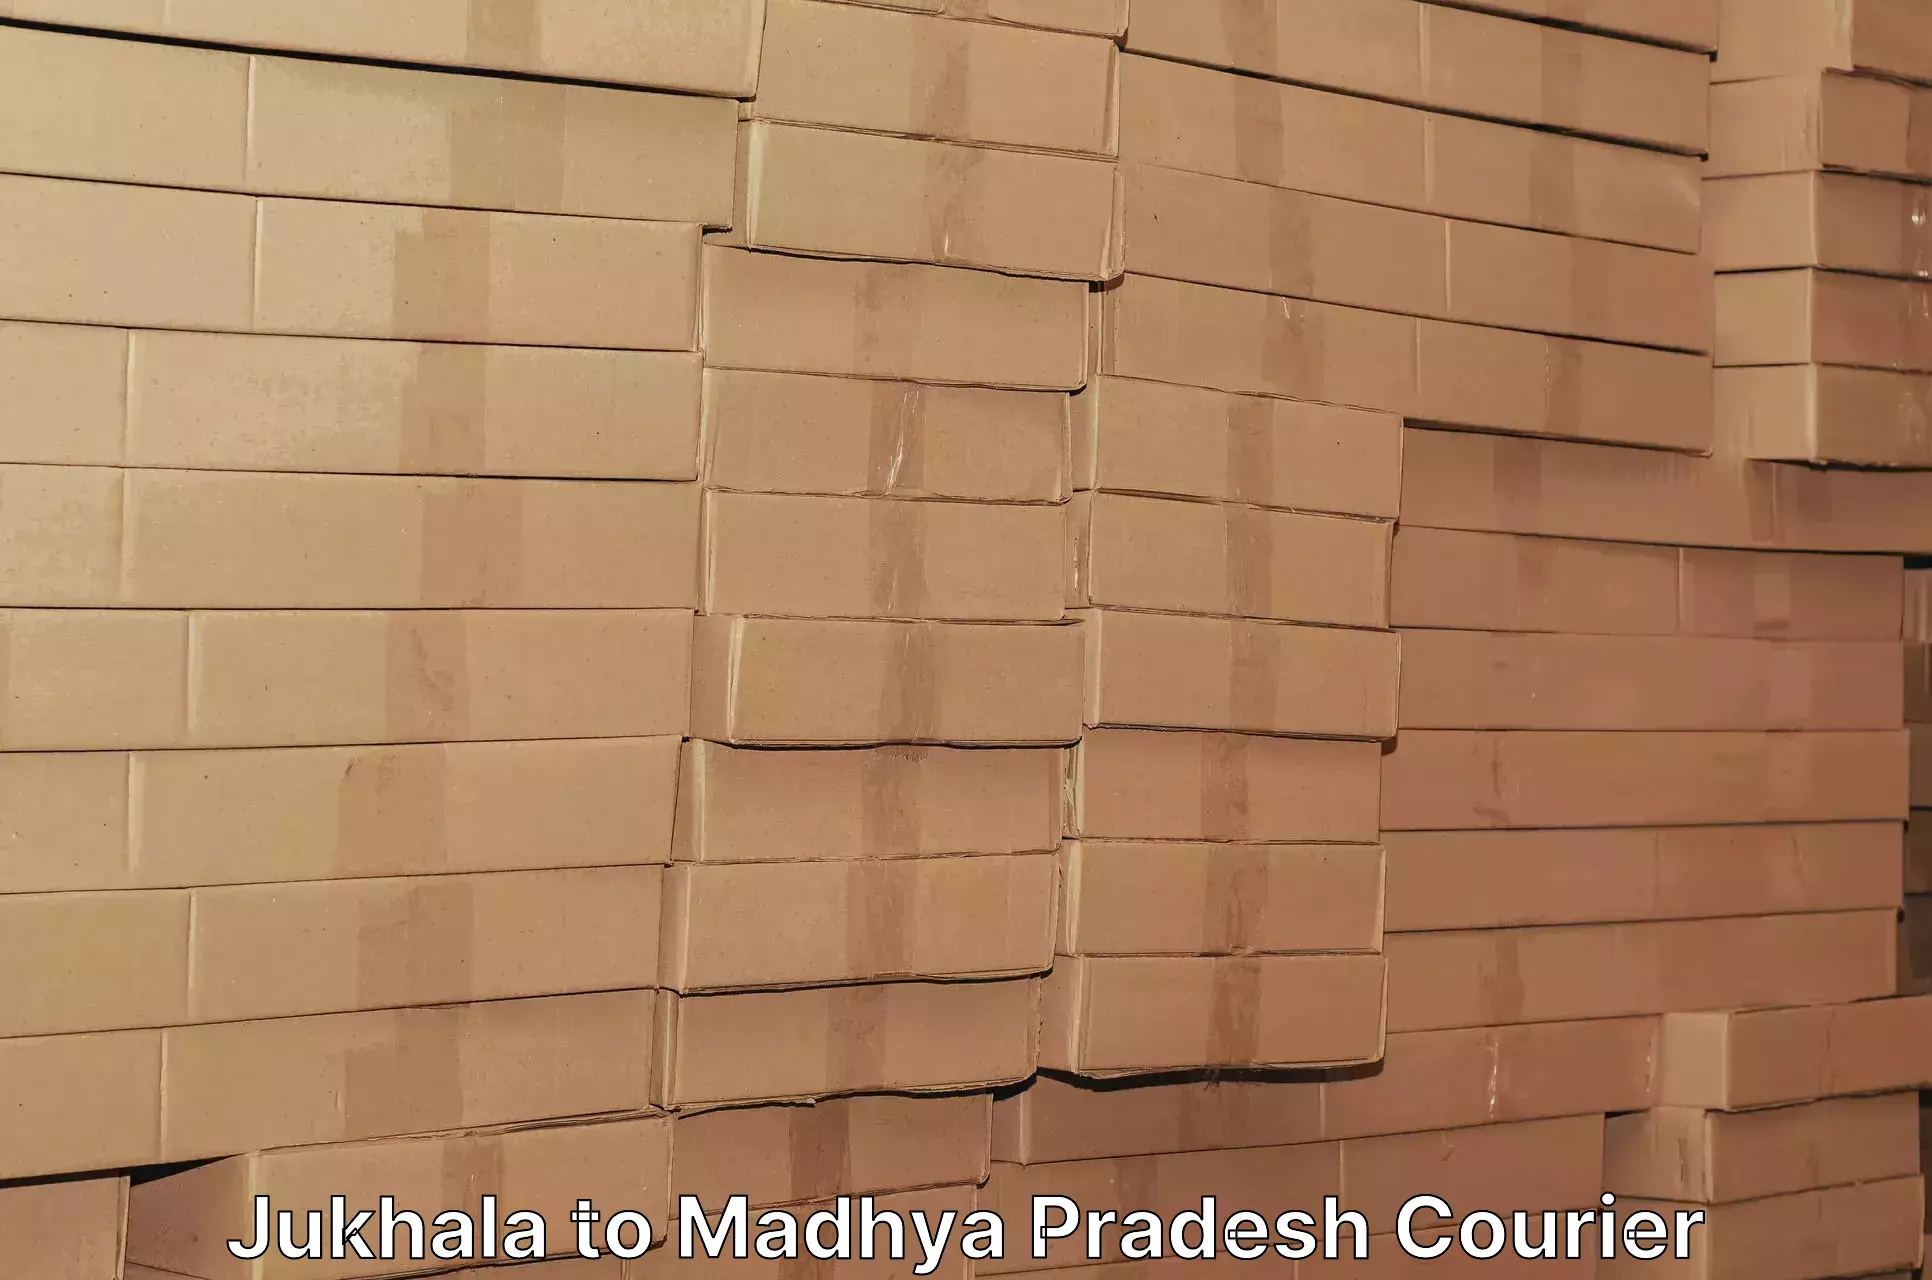 State-of-the-art courier technology Jukhala to Madhya Pradesh